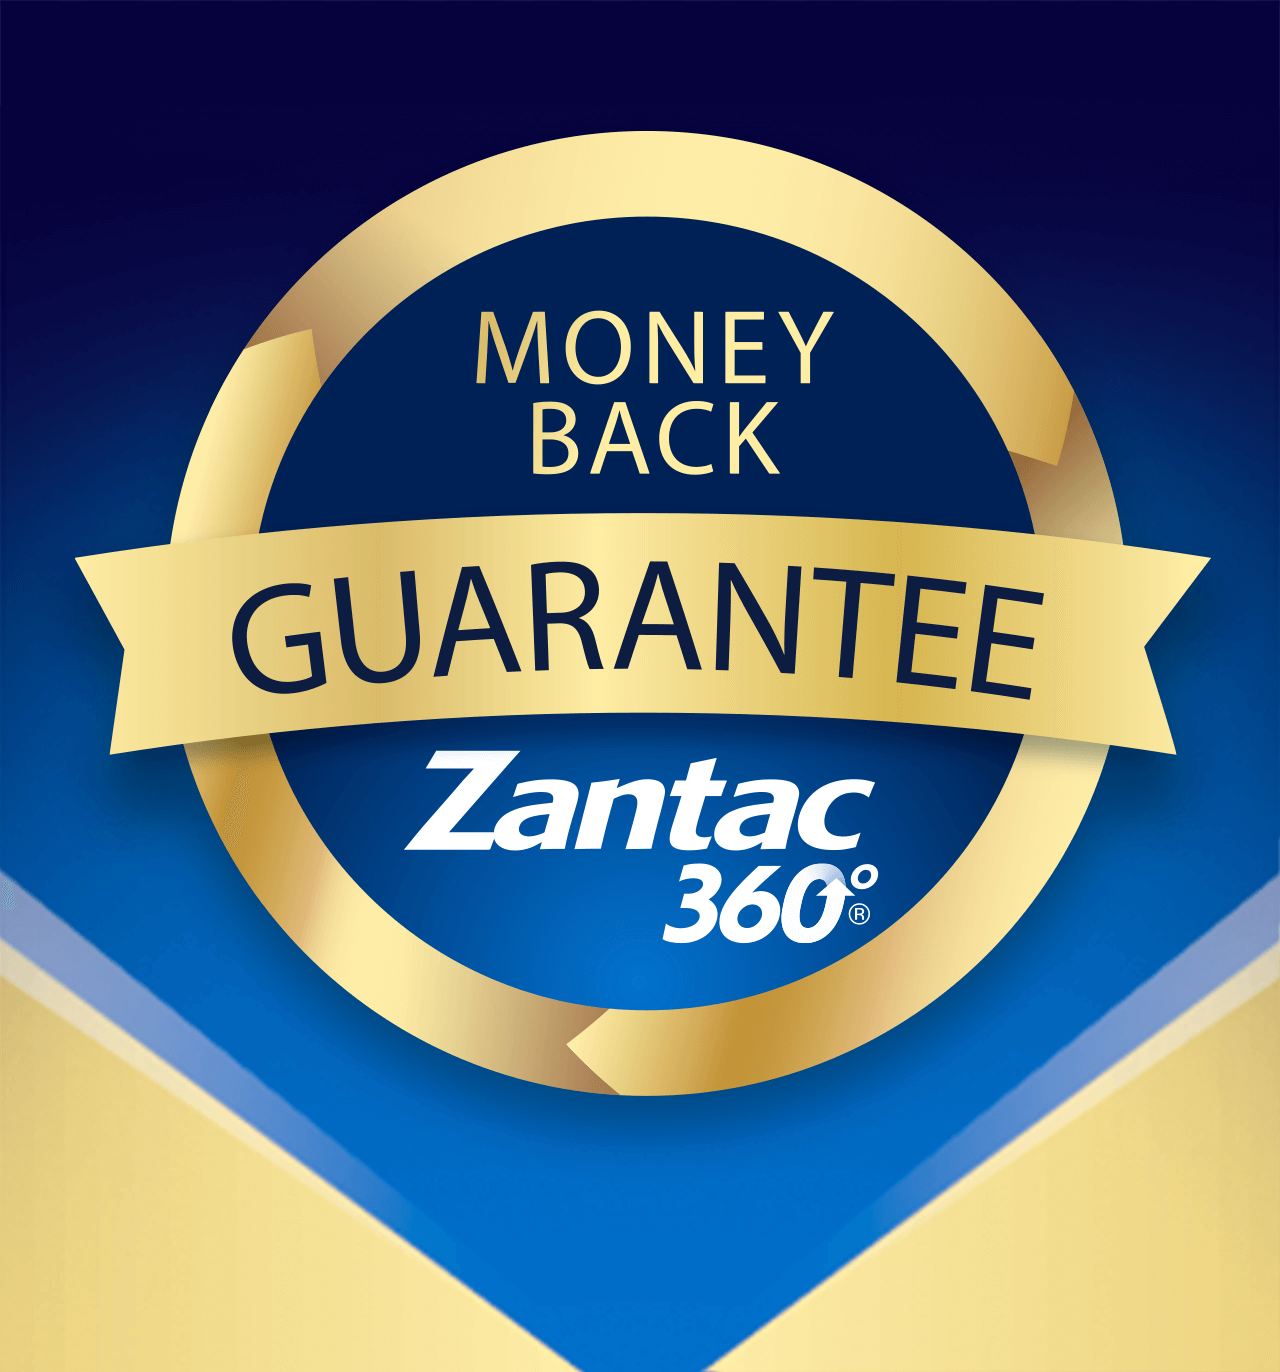 Zantac 360° Money Back Guarantee